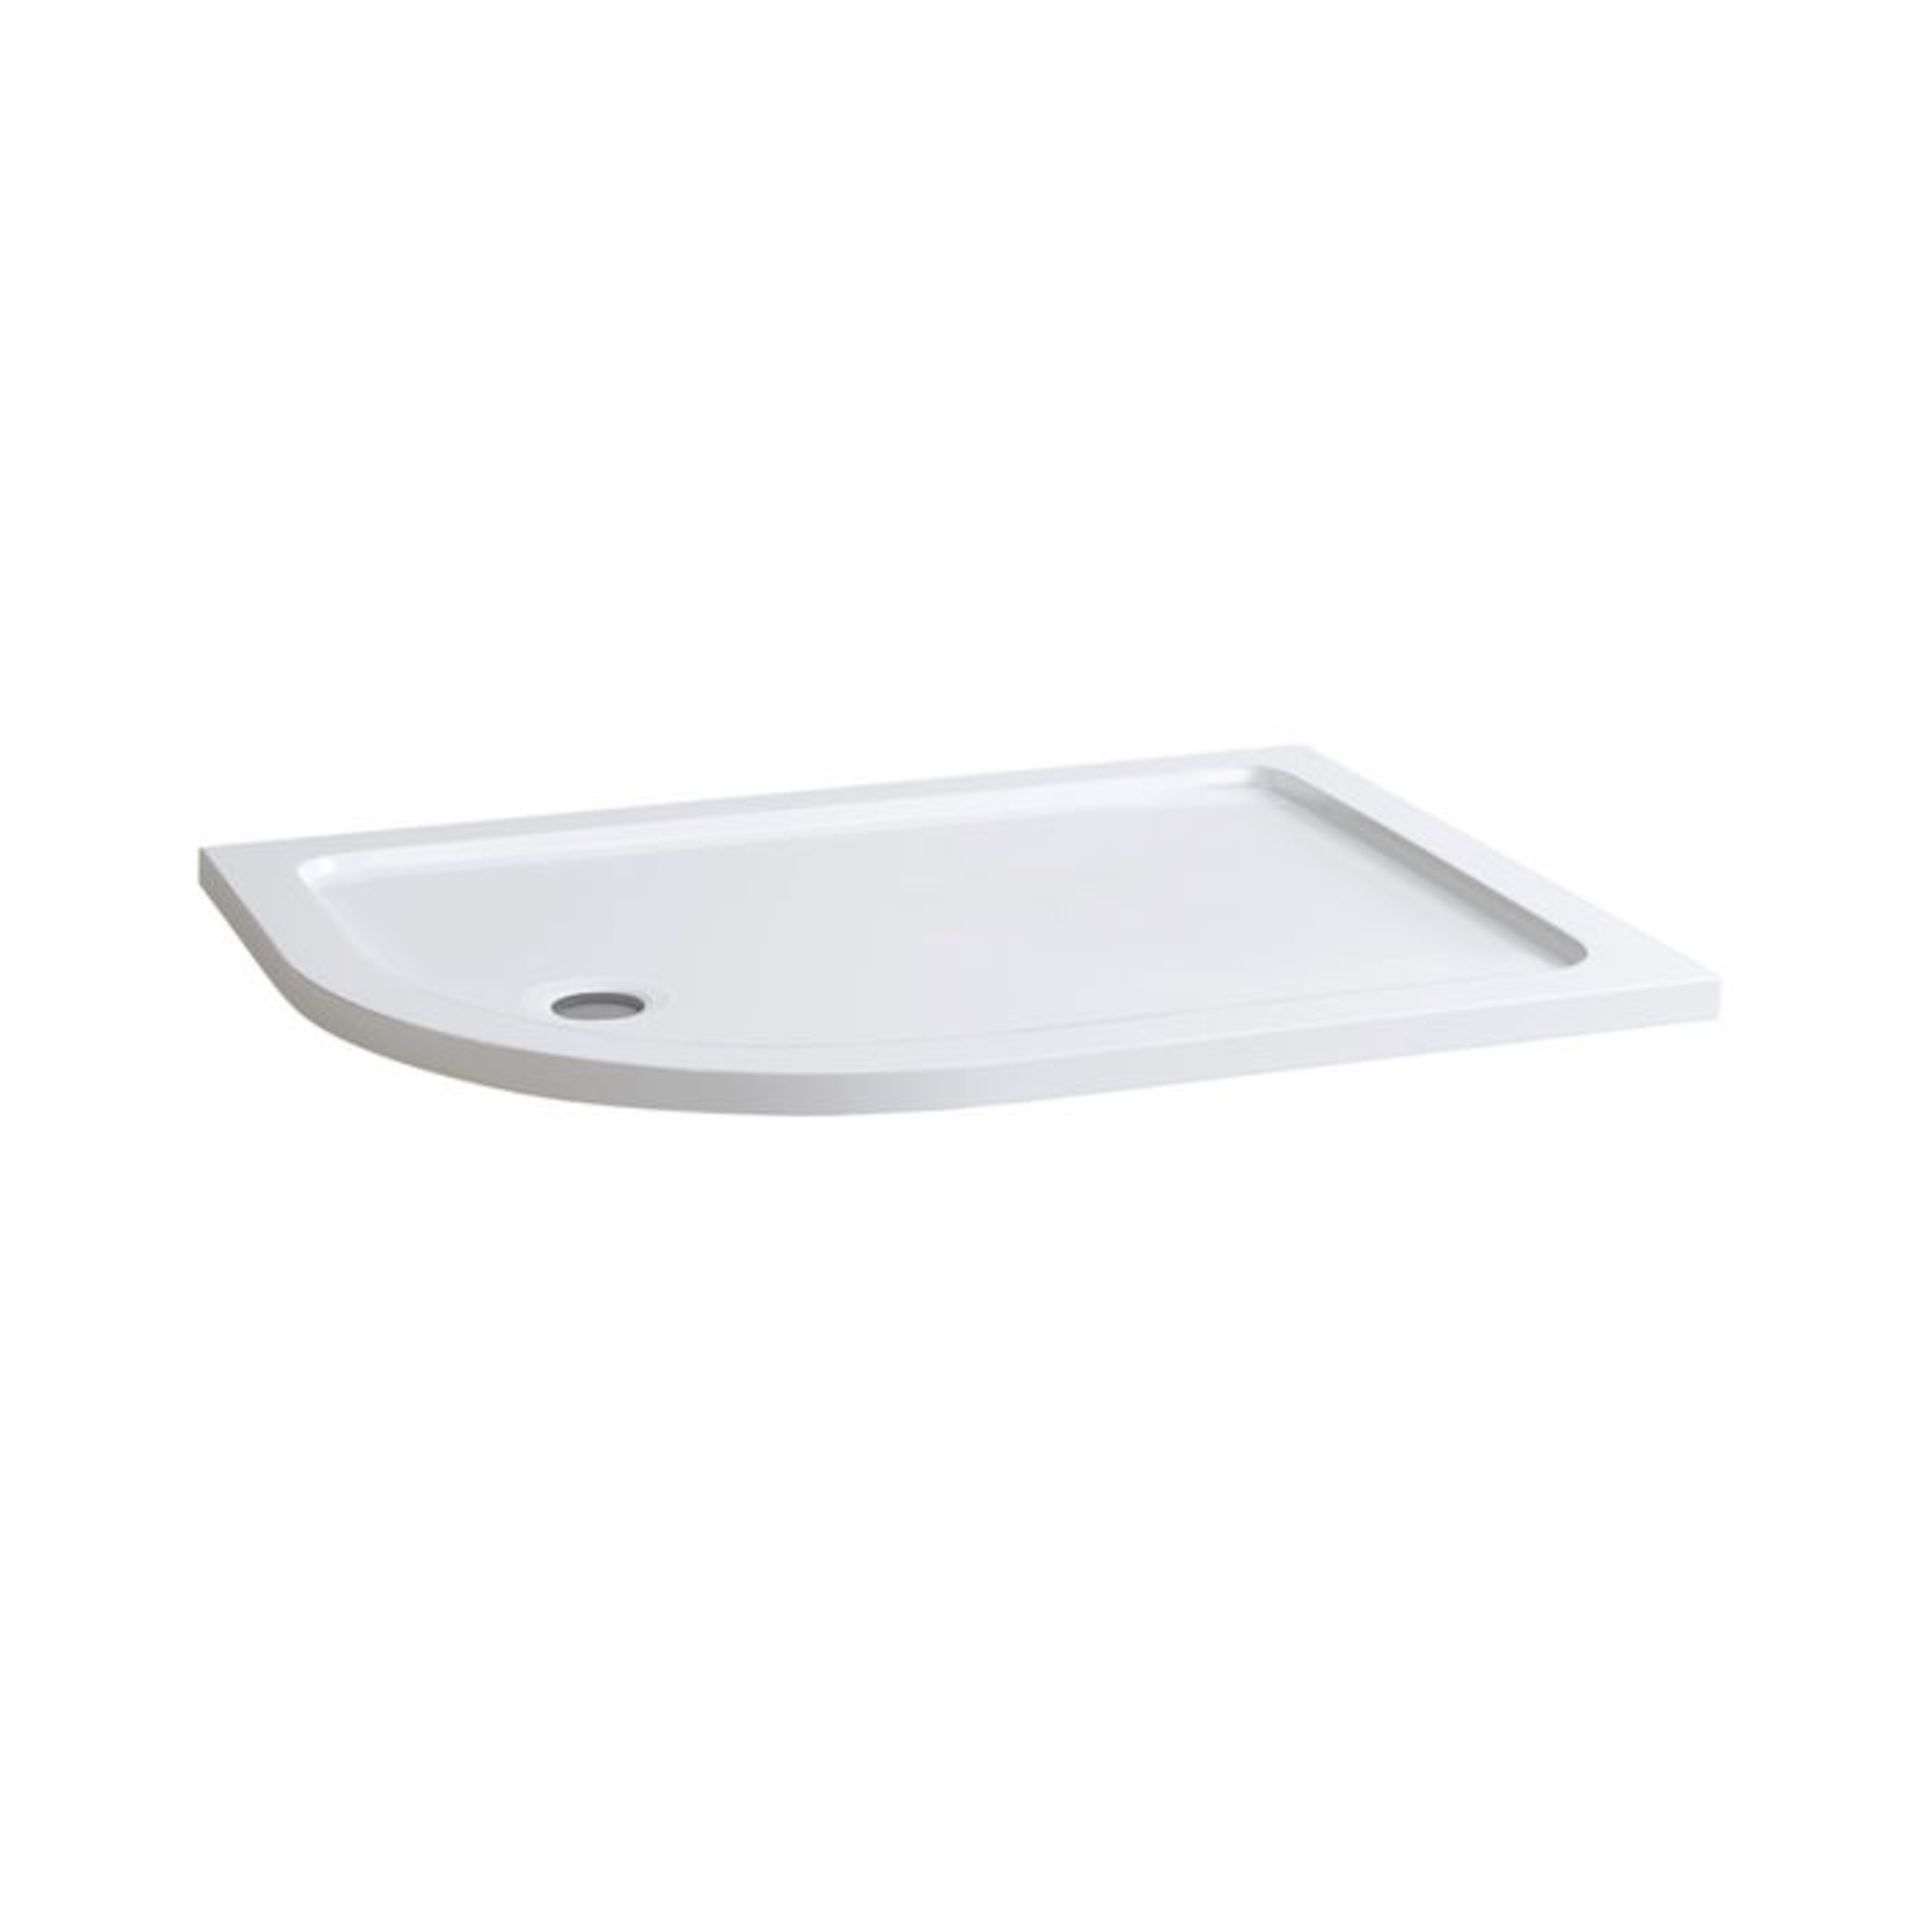 (CS53) 1200x900mm Offset Quadrant Ultra Slim Stone Shower Tray - Left. Low profile ultra slim design - Image 2 of 2